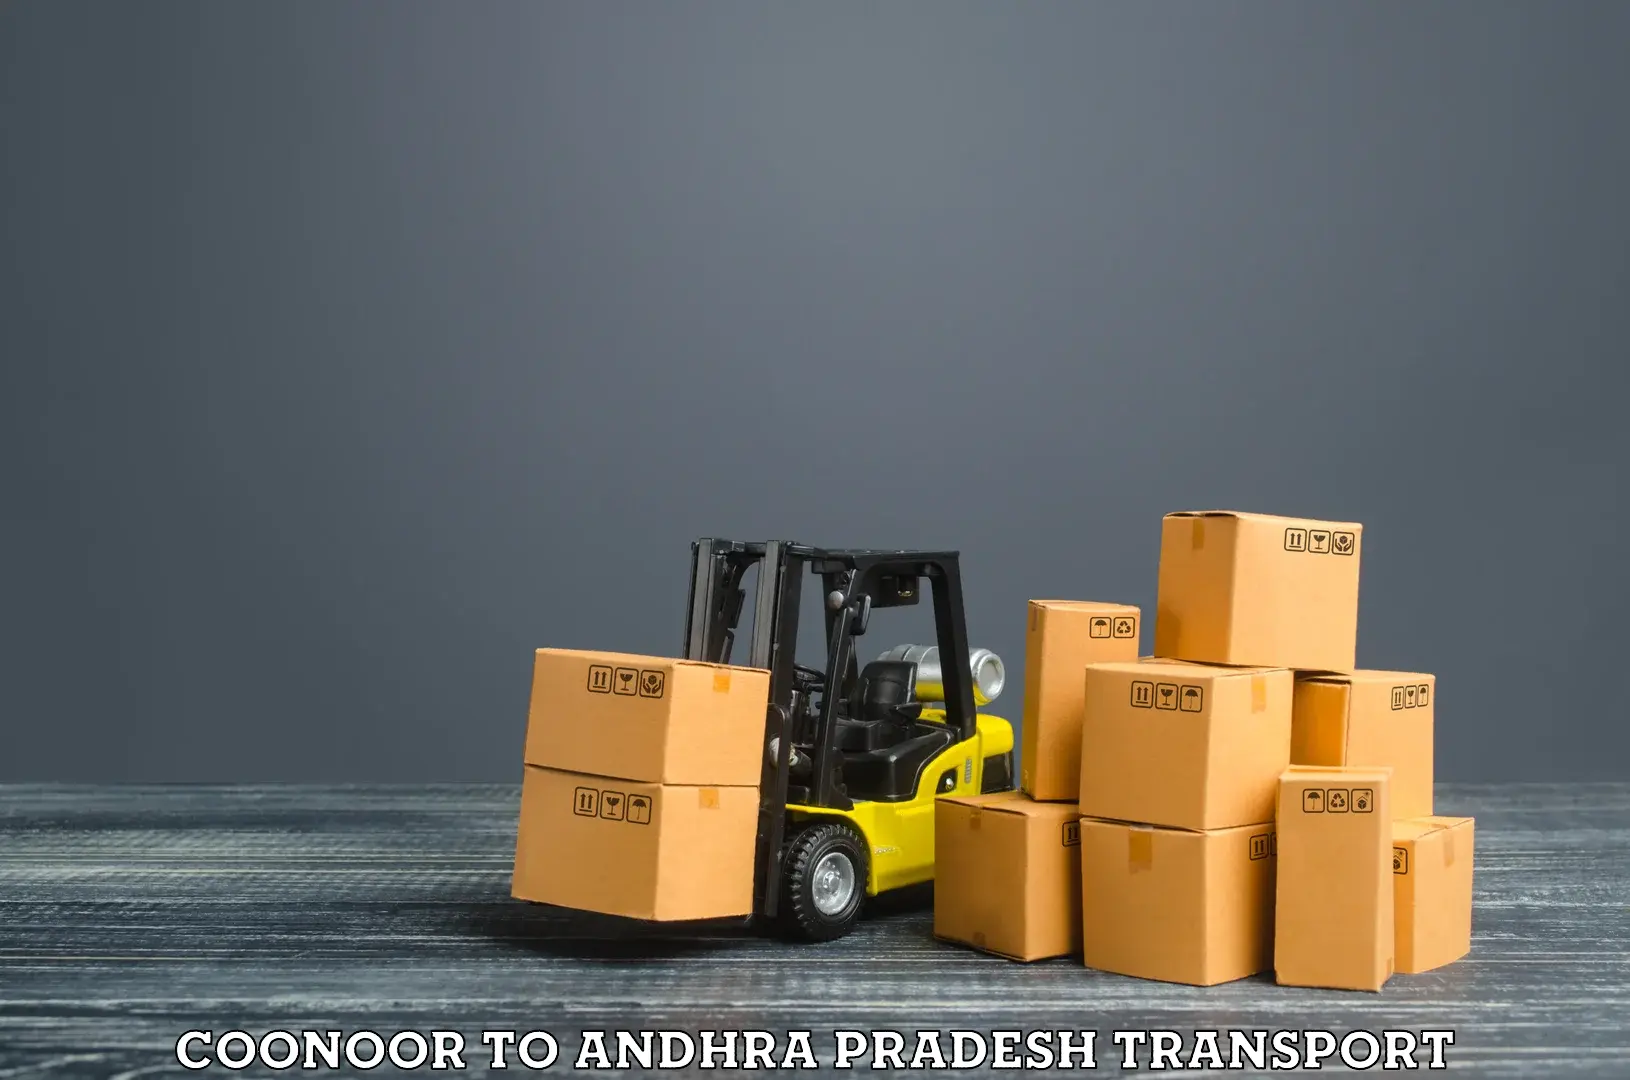 Lorry transport service Coonoor to Chodavaram